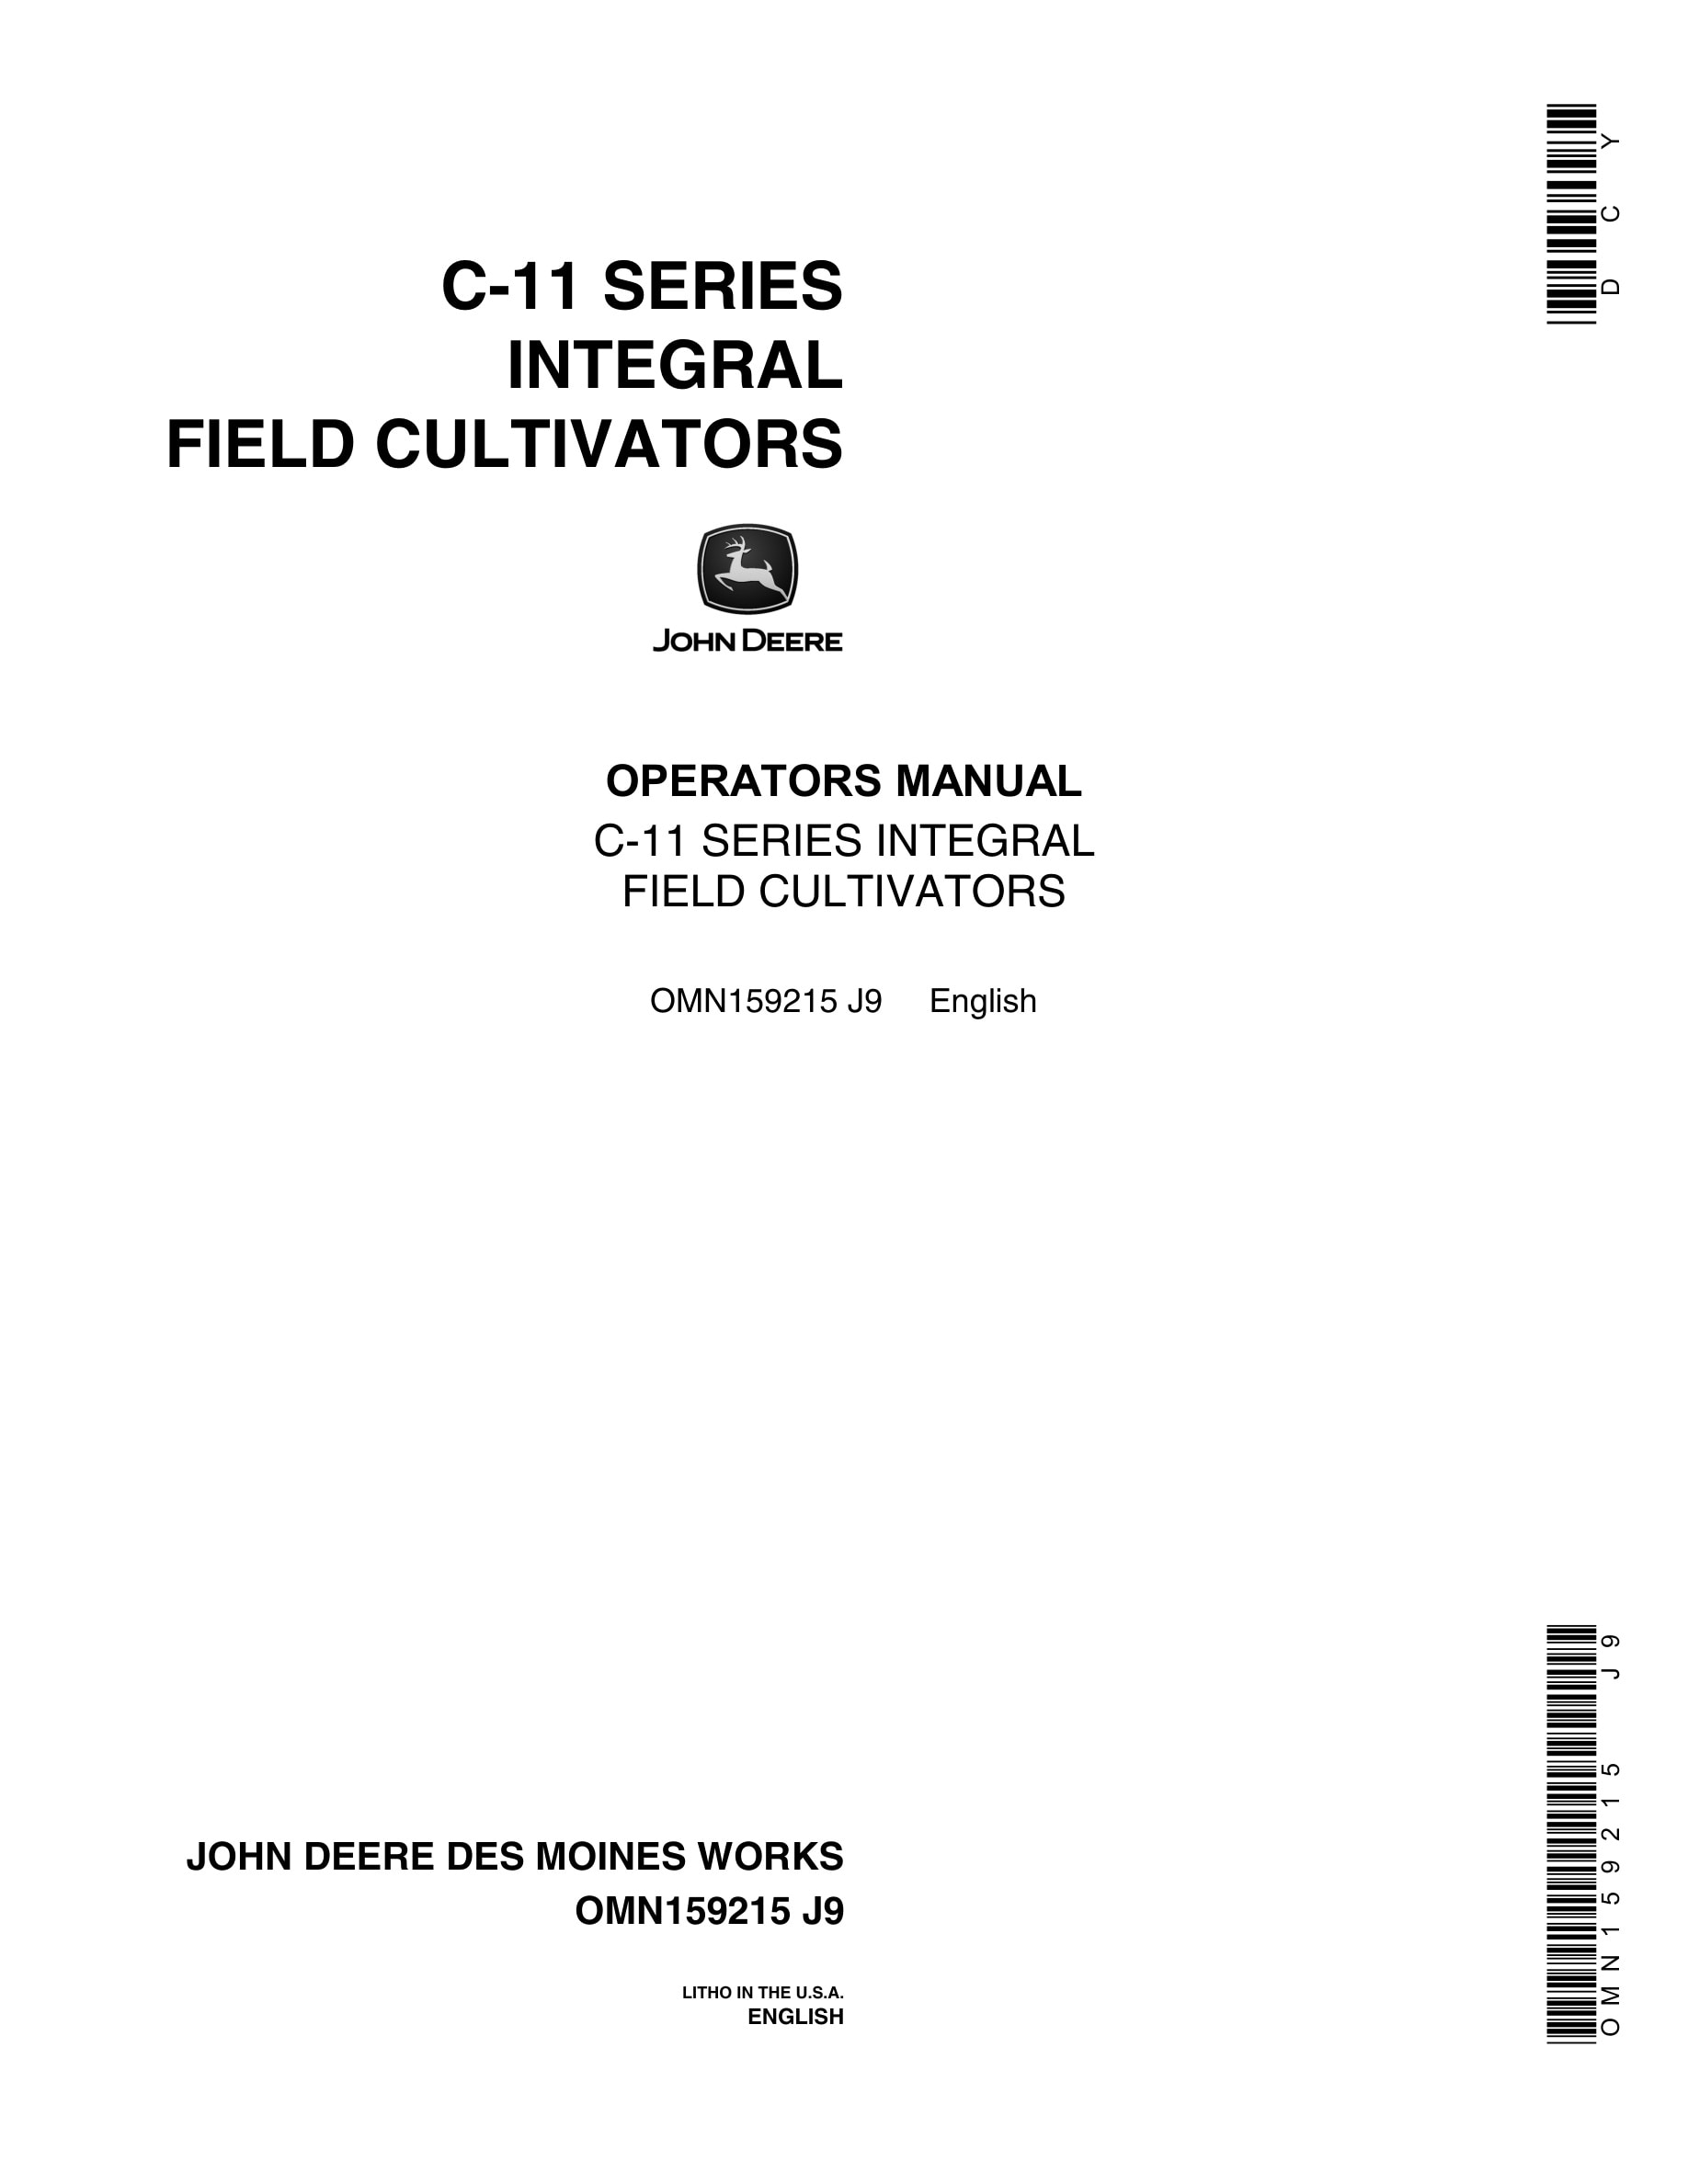 John Deere C-11 SERIES INTEGRAL FIELD CULTIVATOR Operator Manual OMN159215-1